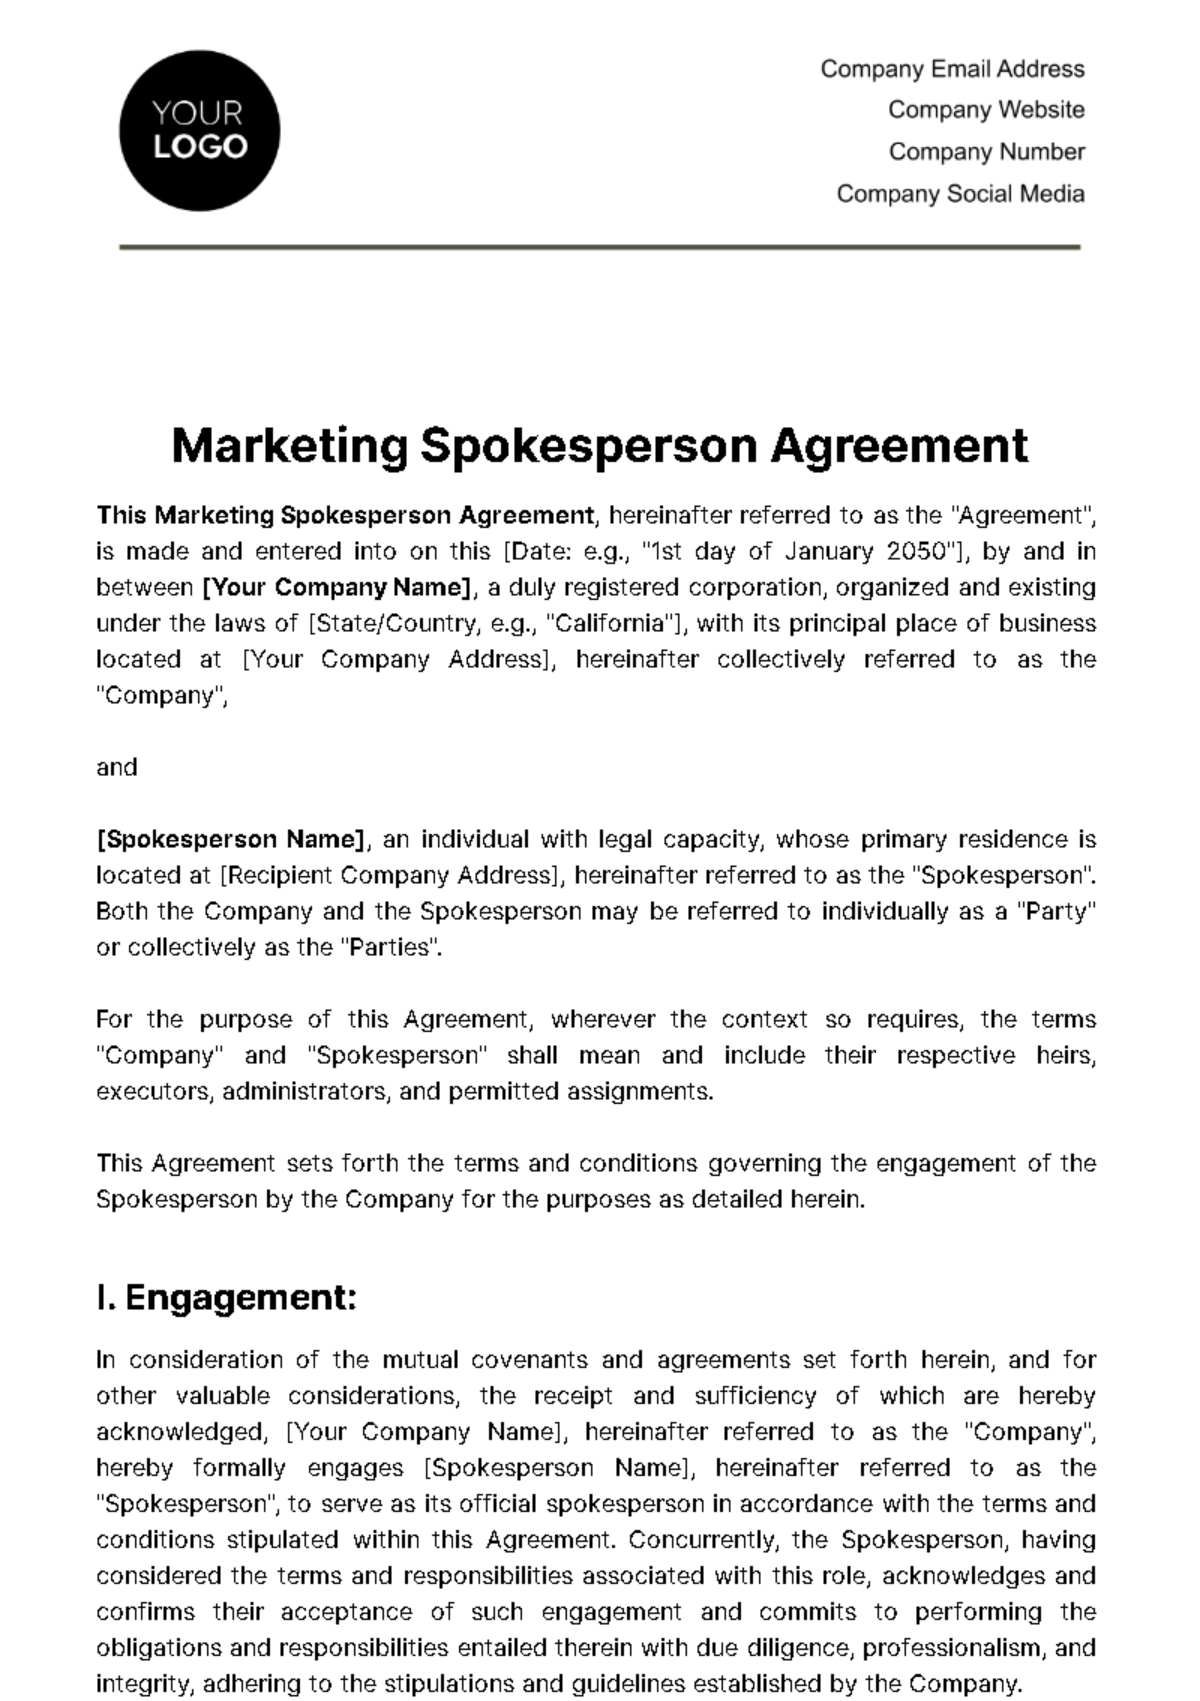 Free Marketing Spokesperson Agreement Template